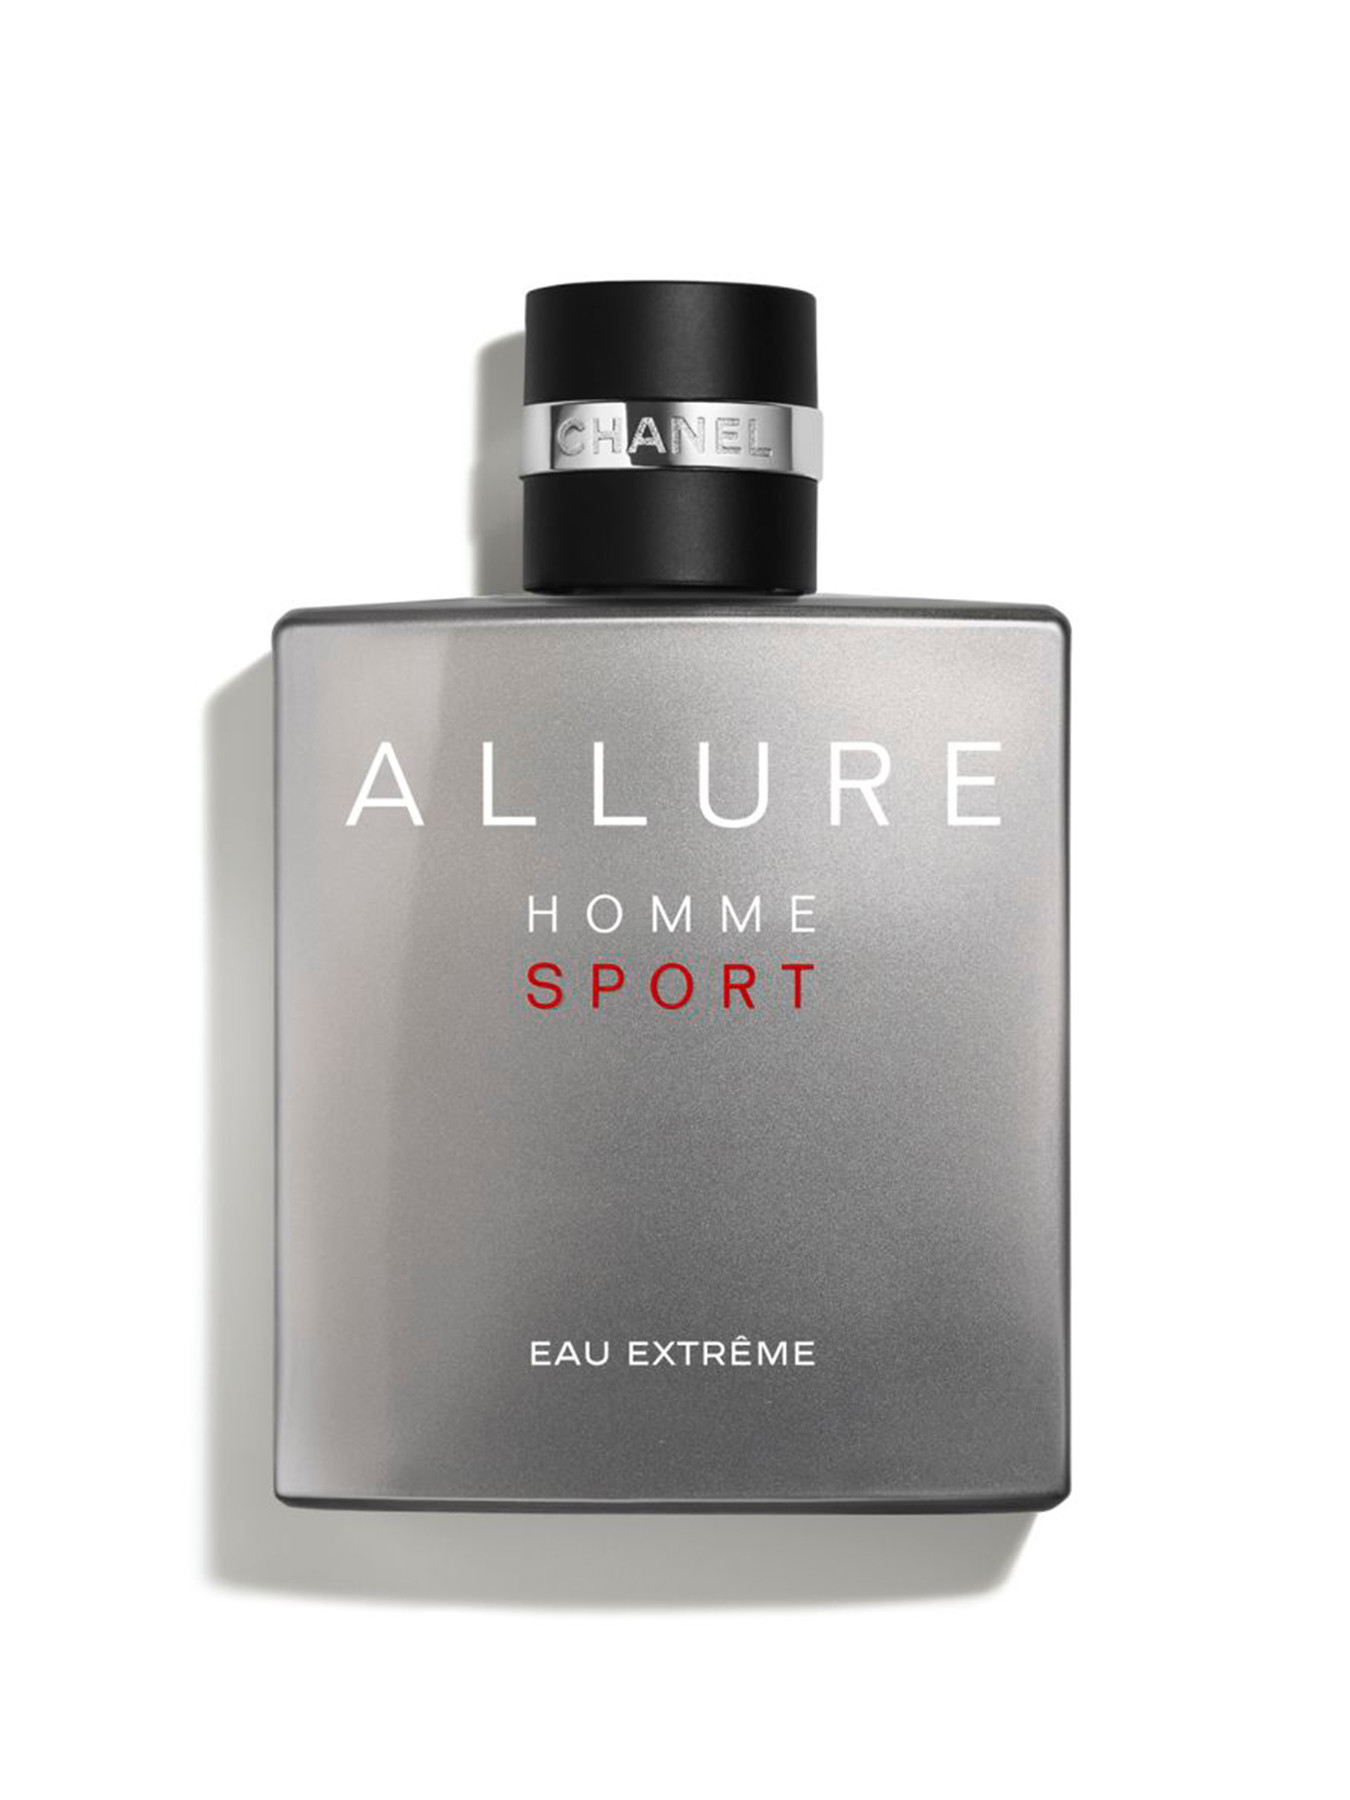 Allure homme sport мужской. Allure homme Sport 100ml. Шанель Аллюр хом спорт. Chanel Allure Sport 100 ml. Allure homme Sport туалетная вода 100 мл.